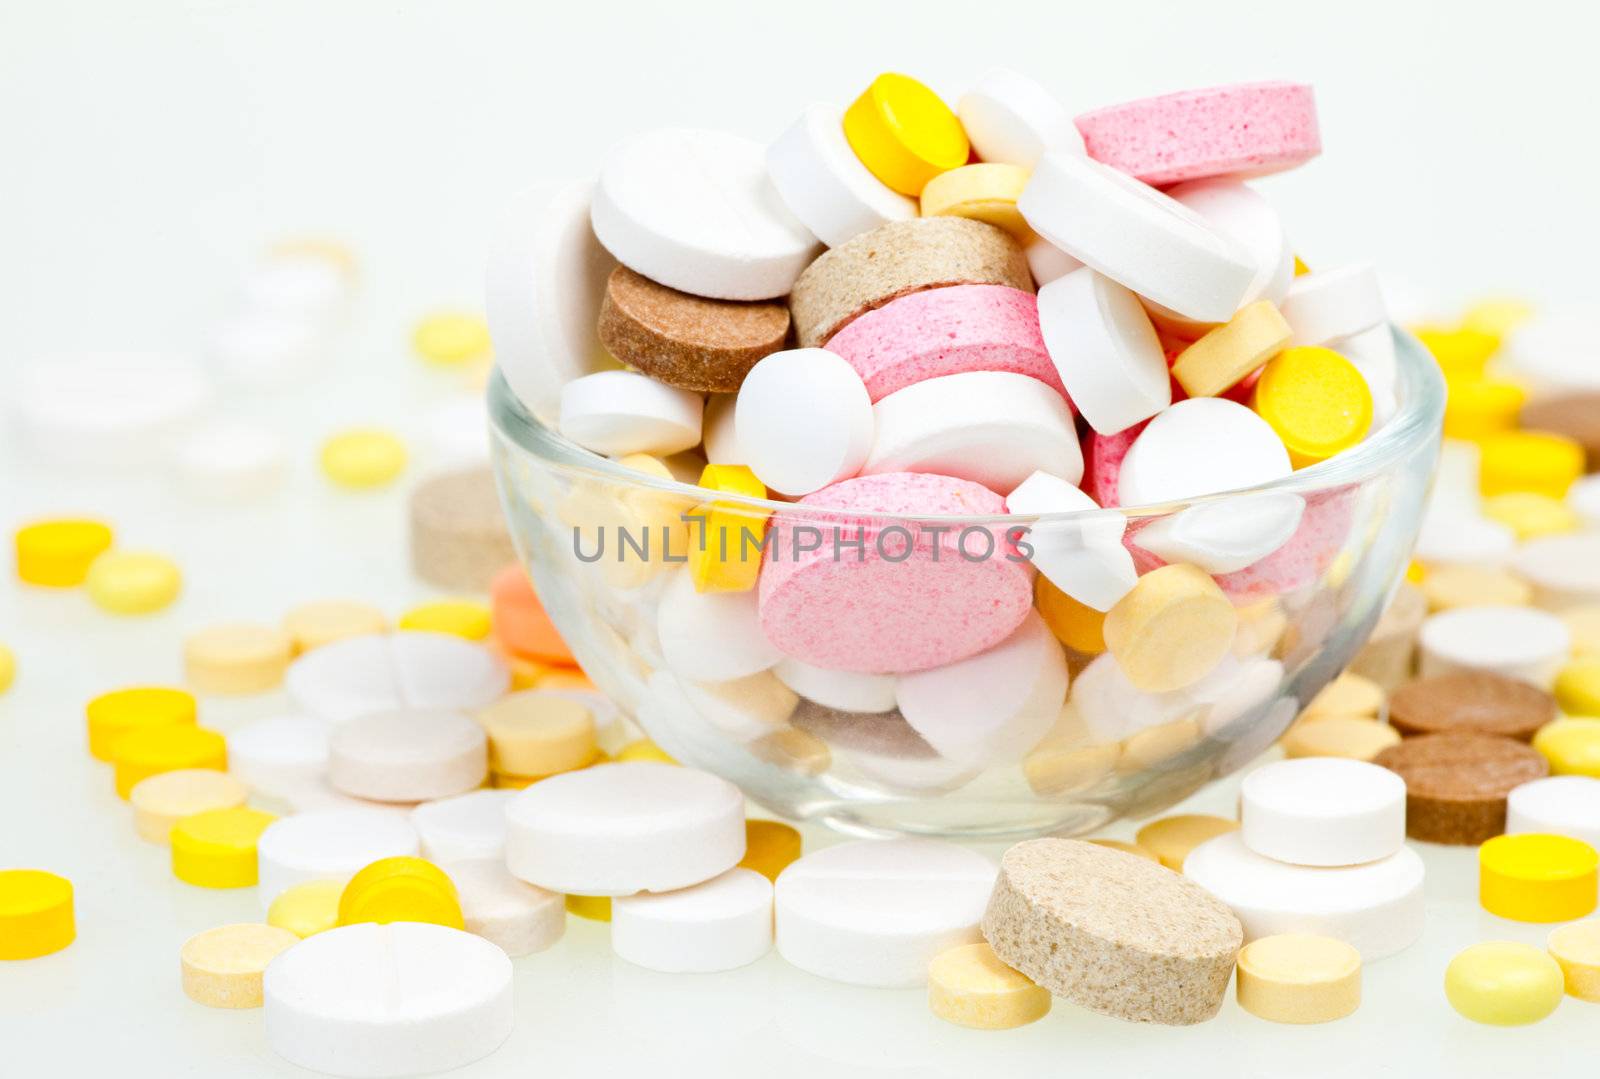 Pills by naumoid